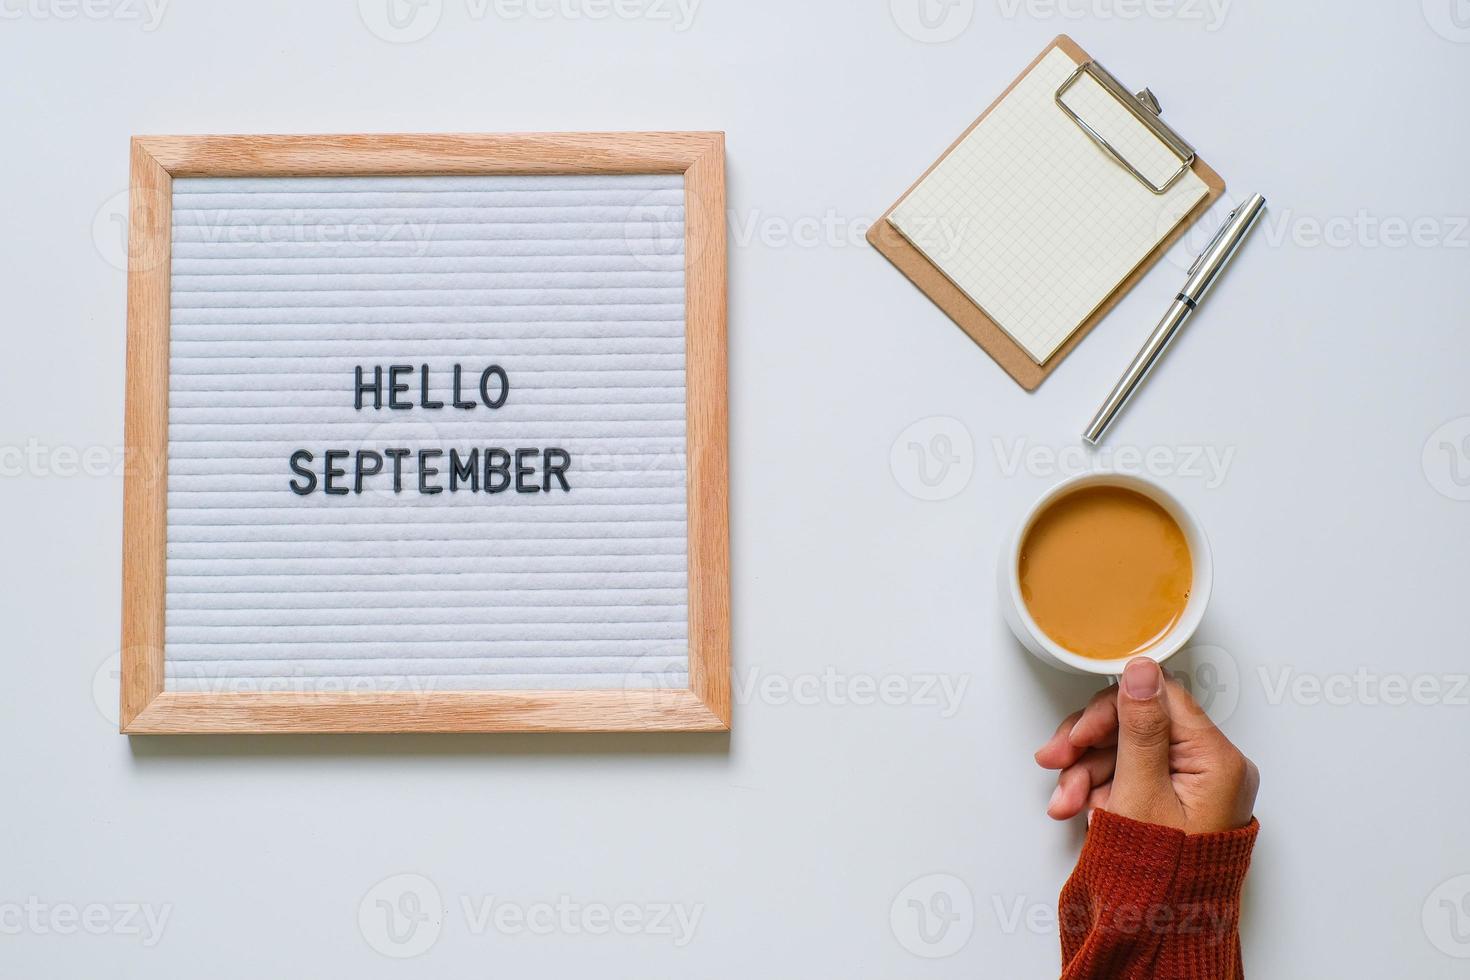 Hello September greeting concept photo